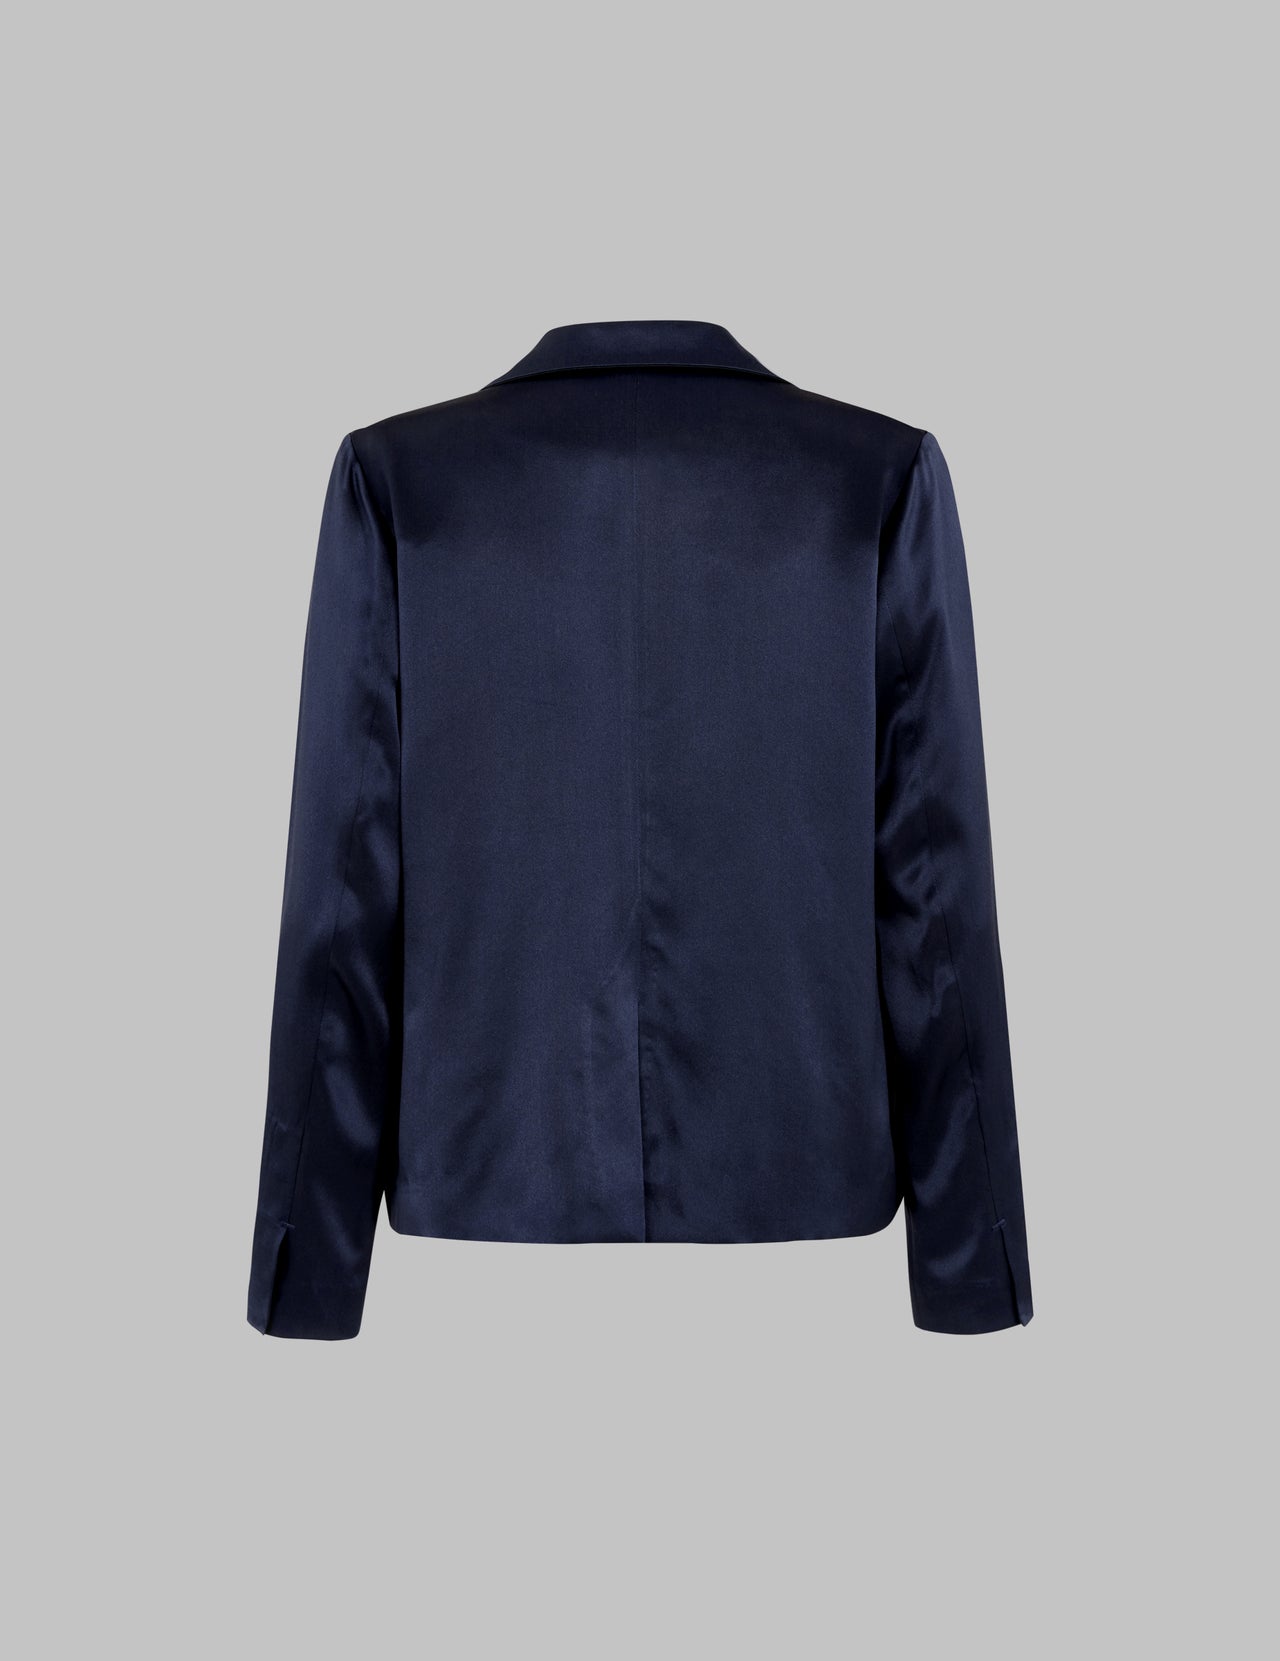  Navy Silk Satin Deconstructed Jacket 